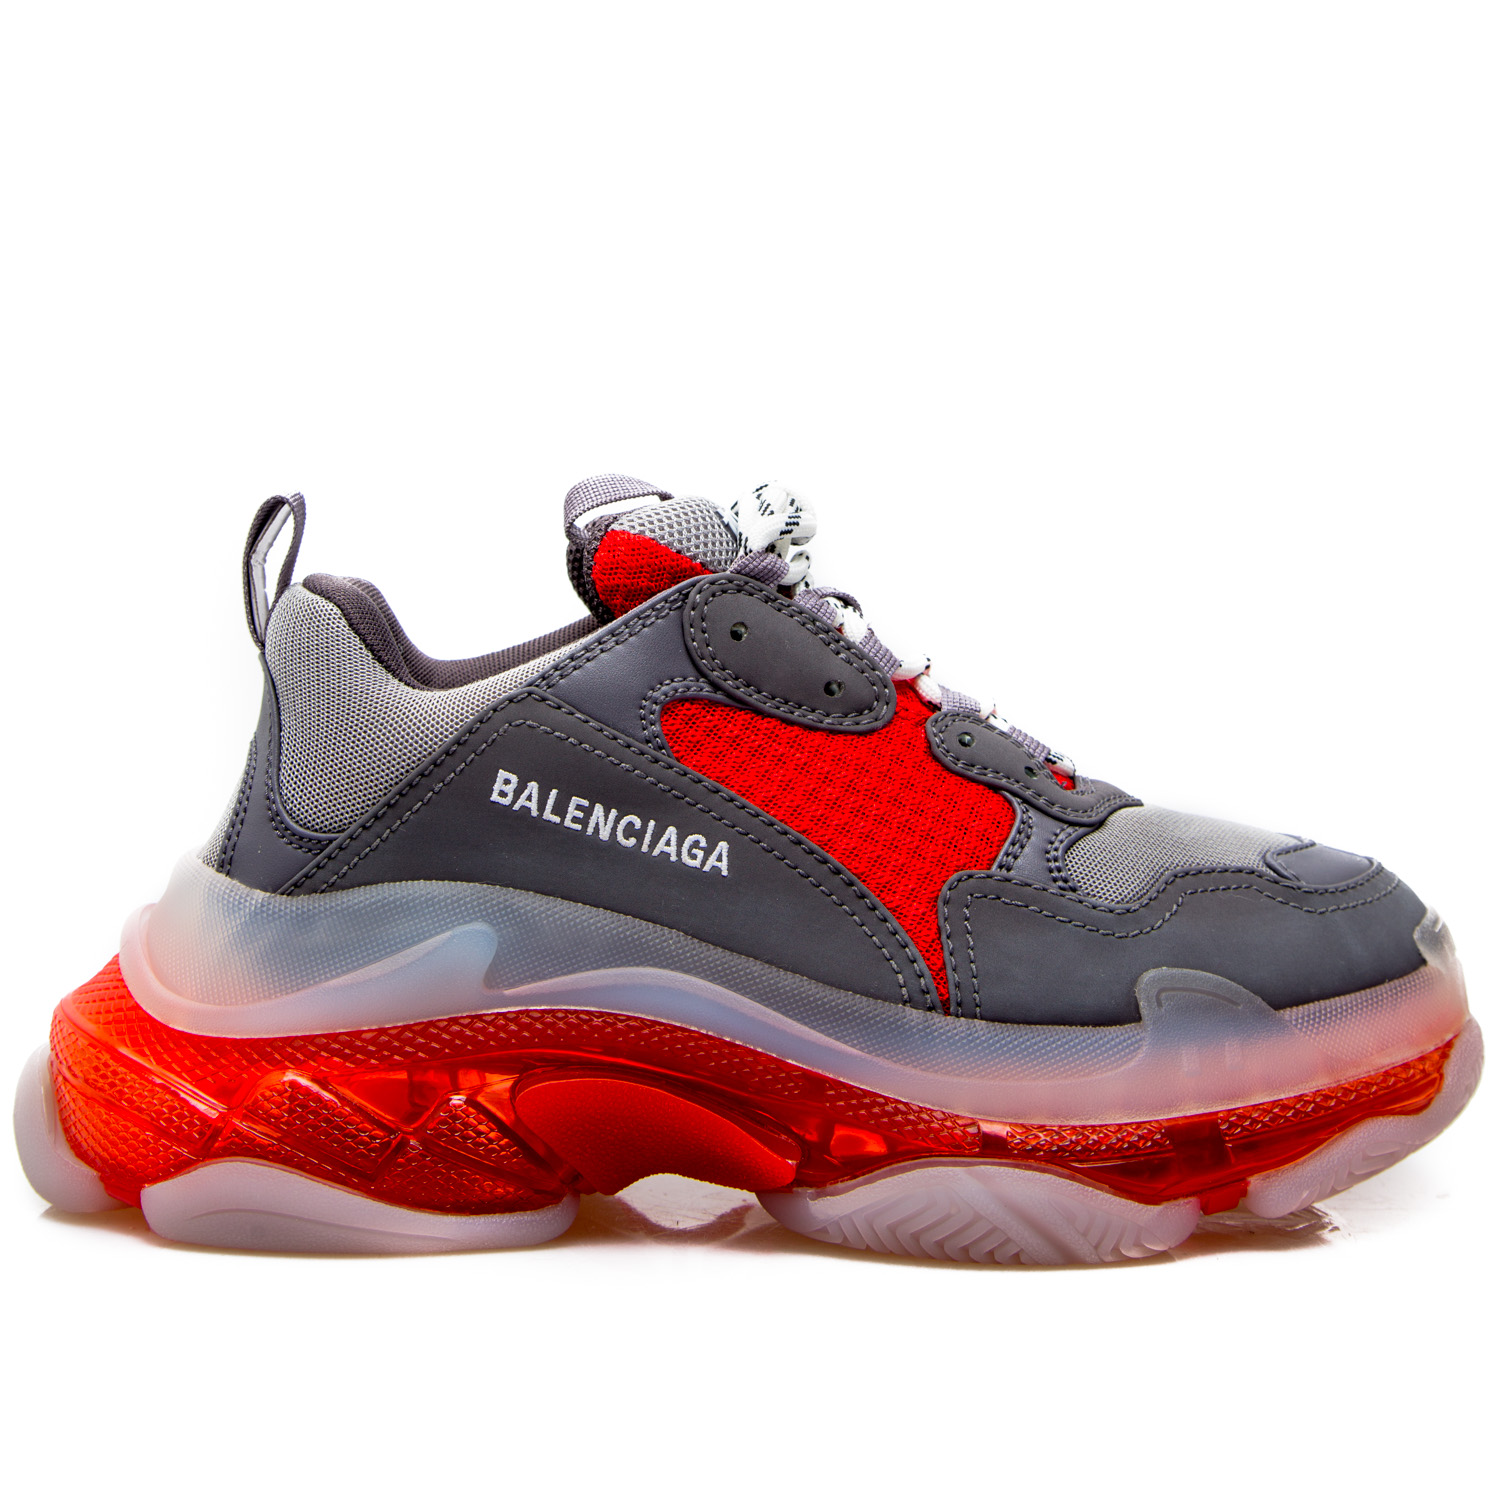 LUiSAViAROMA Access to Yeezy Balenciaga Triple S Nike